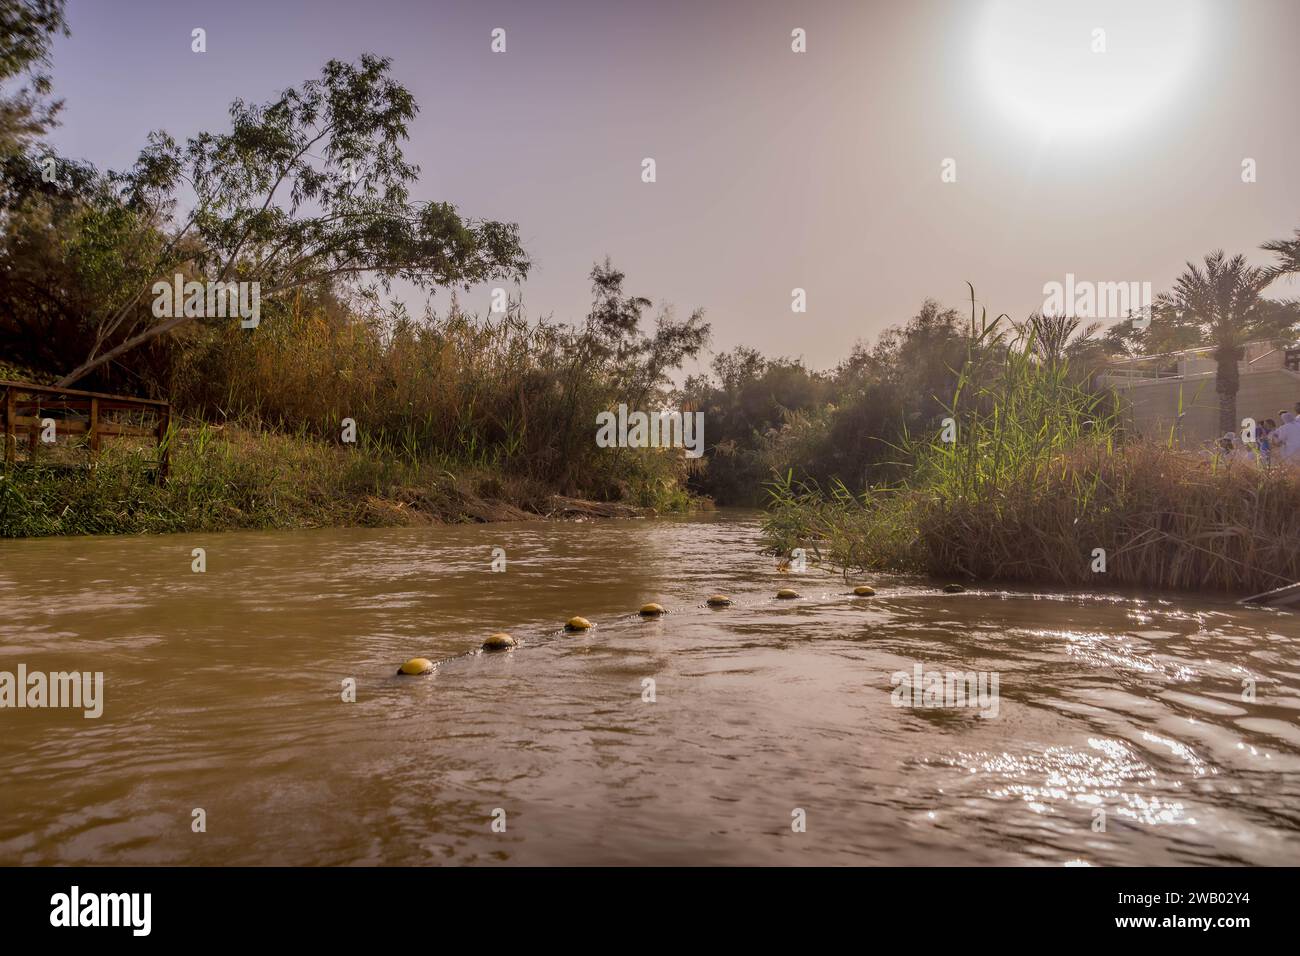 The muddy water of the Jordan river at the border between Palestine and Jordan during the sunset at Qasr al-Yahud, Jesus Christ baptismal site. Stock Photo